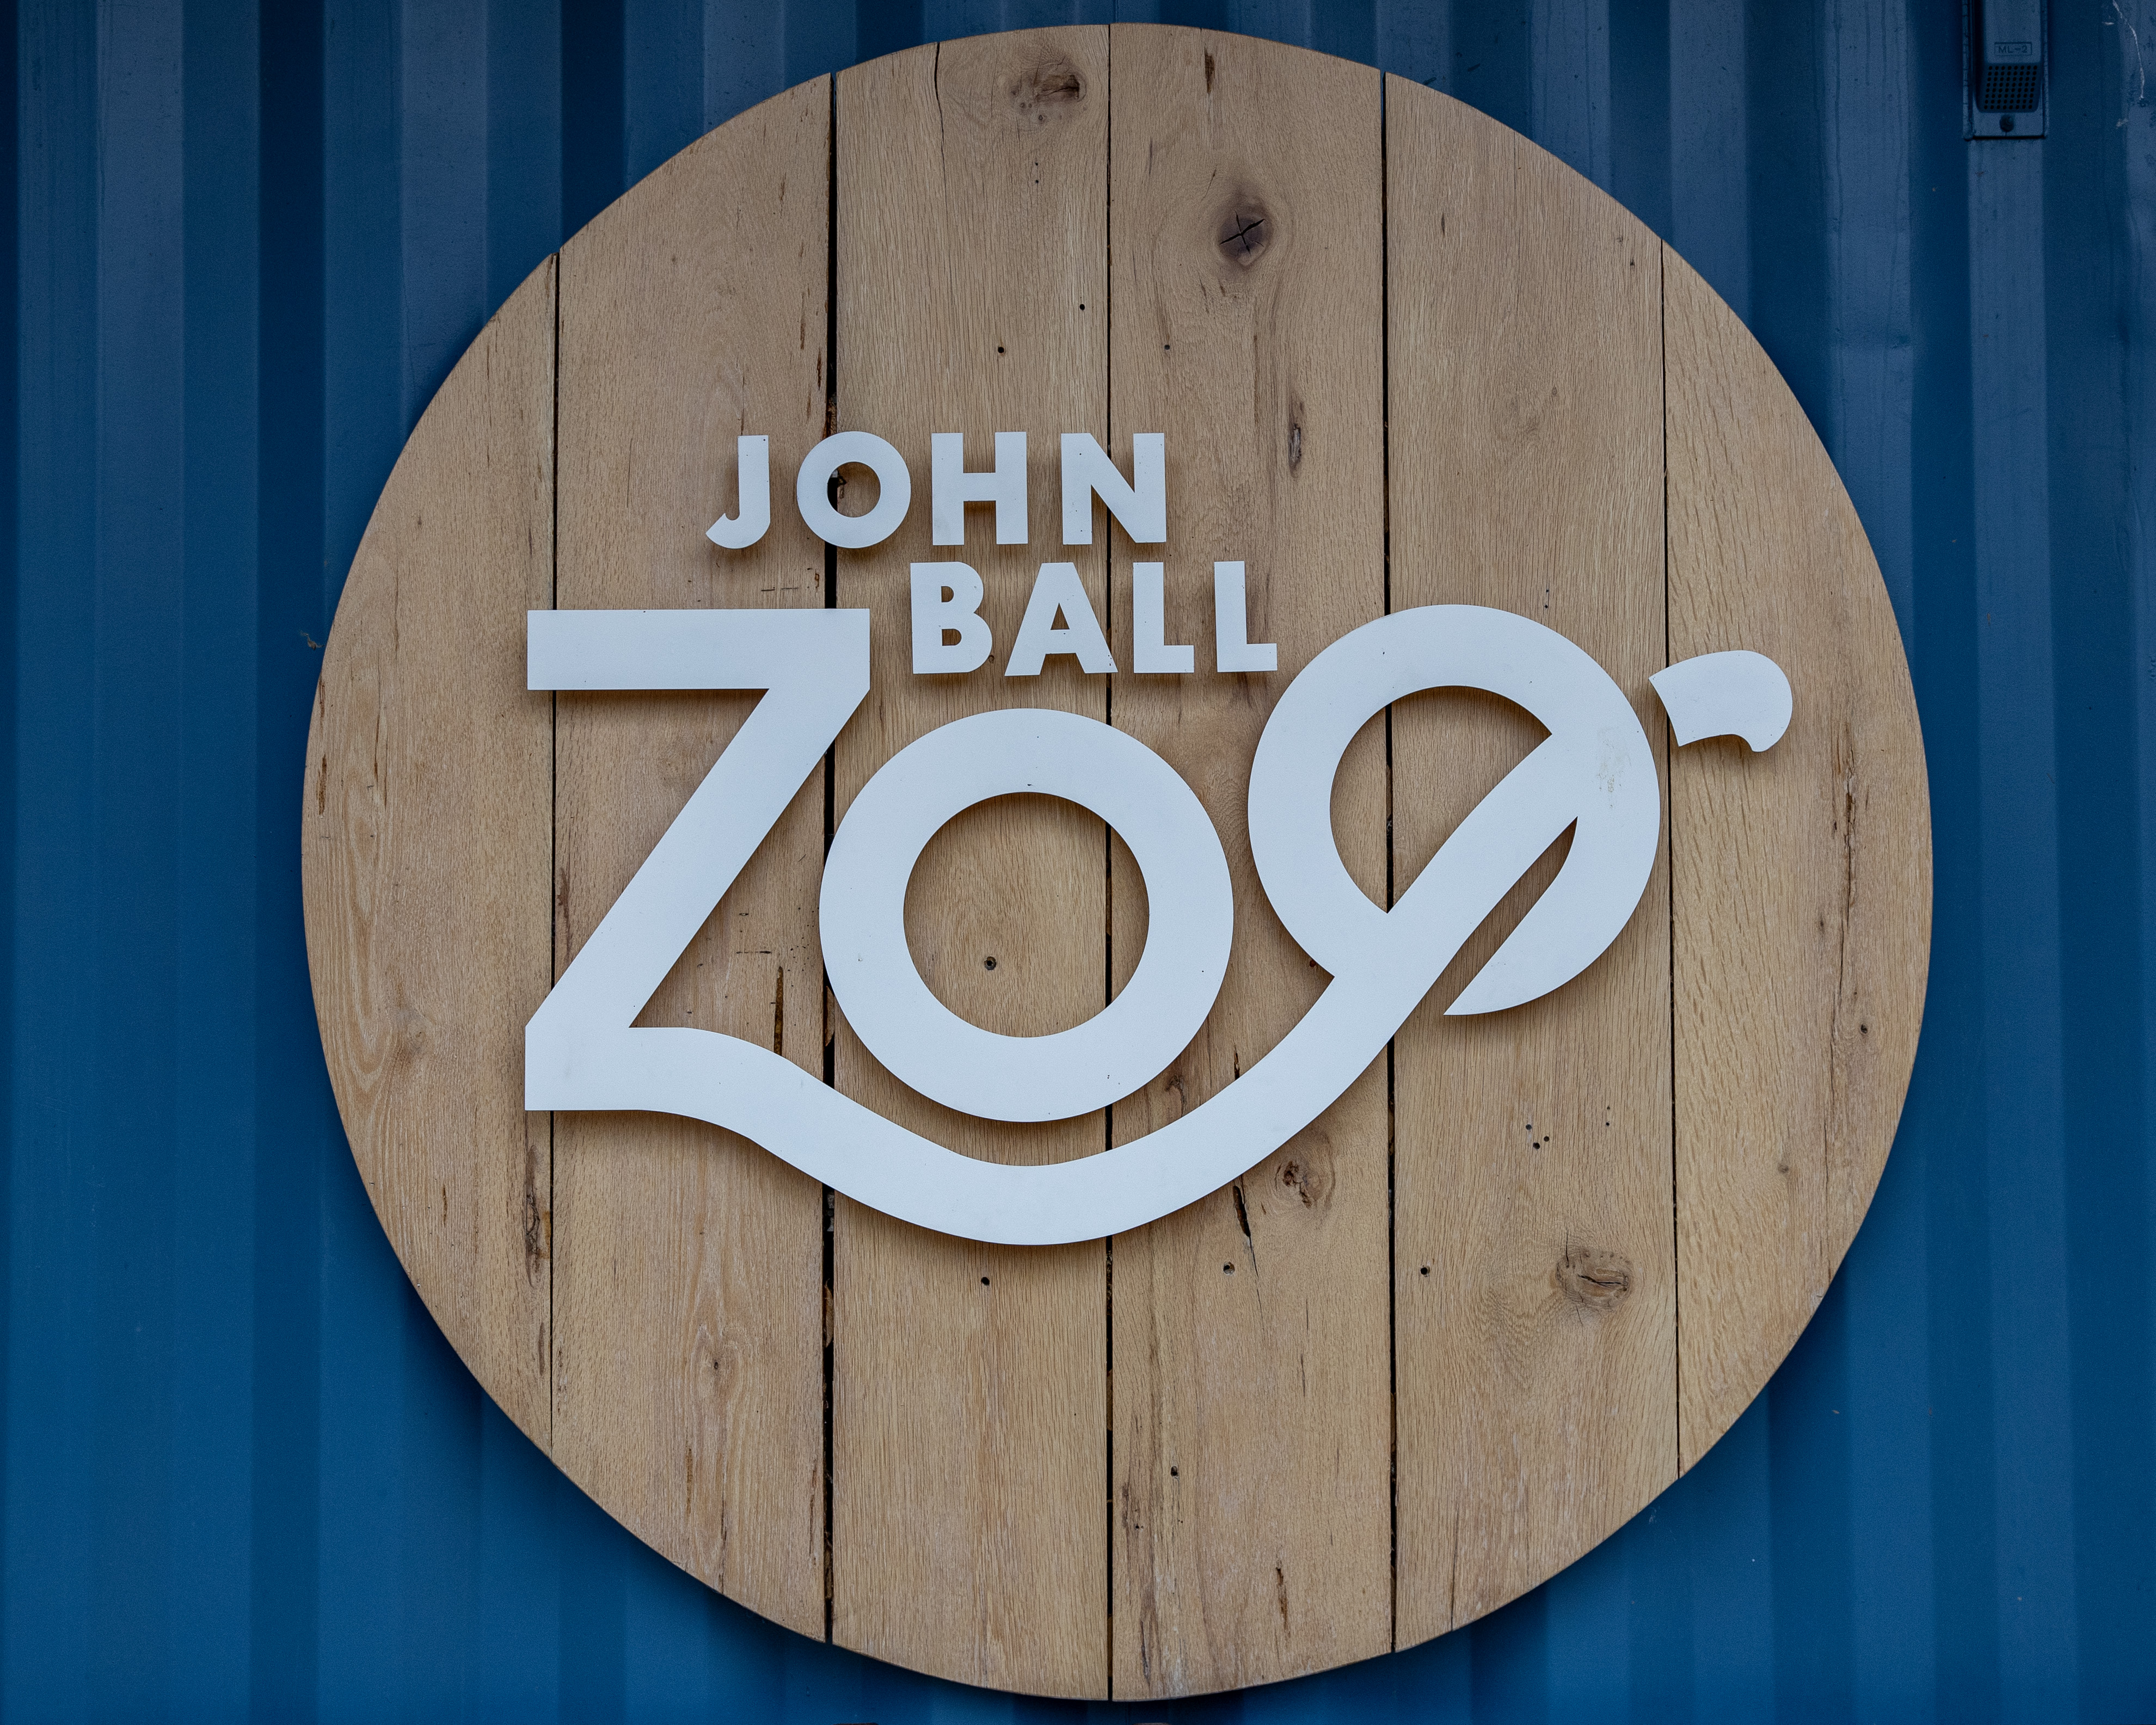 John Ball Zoo parking expansion plans raise concerns among neighbors